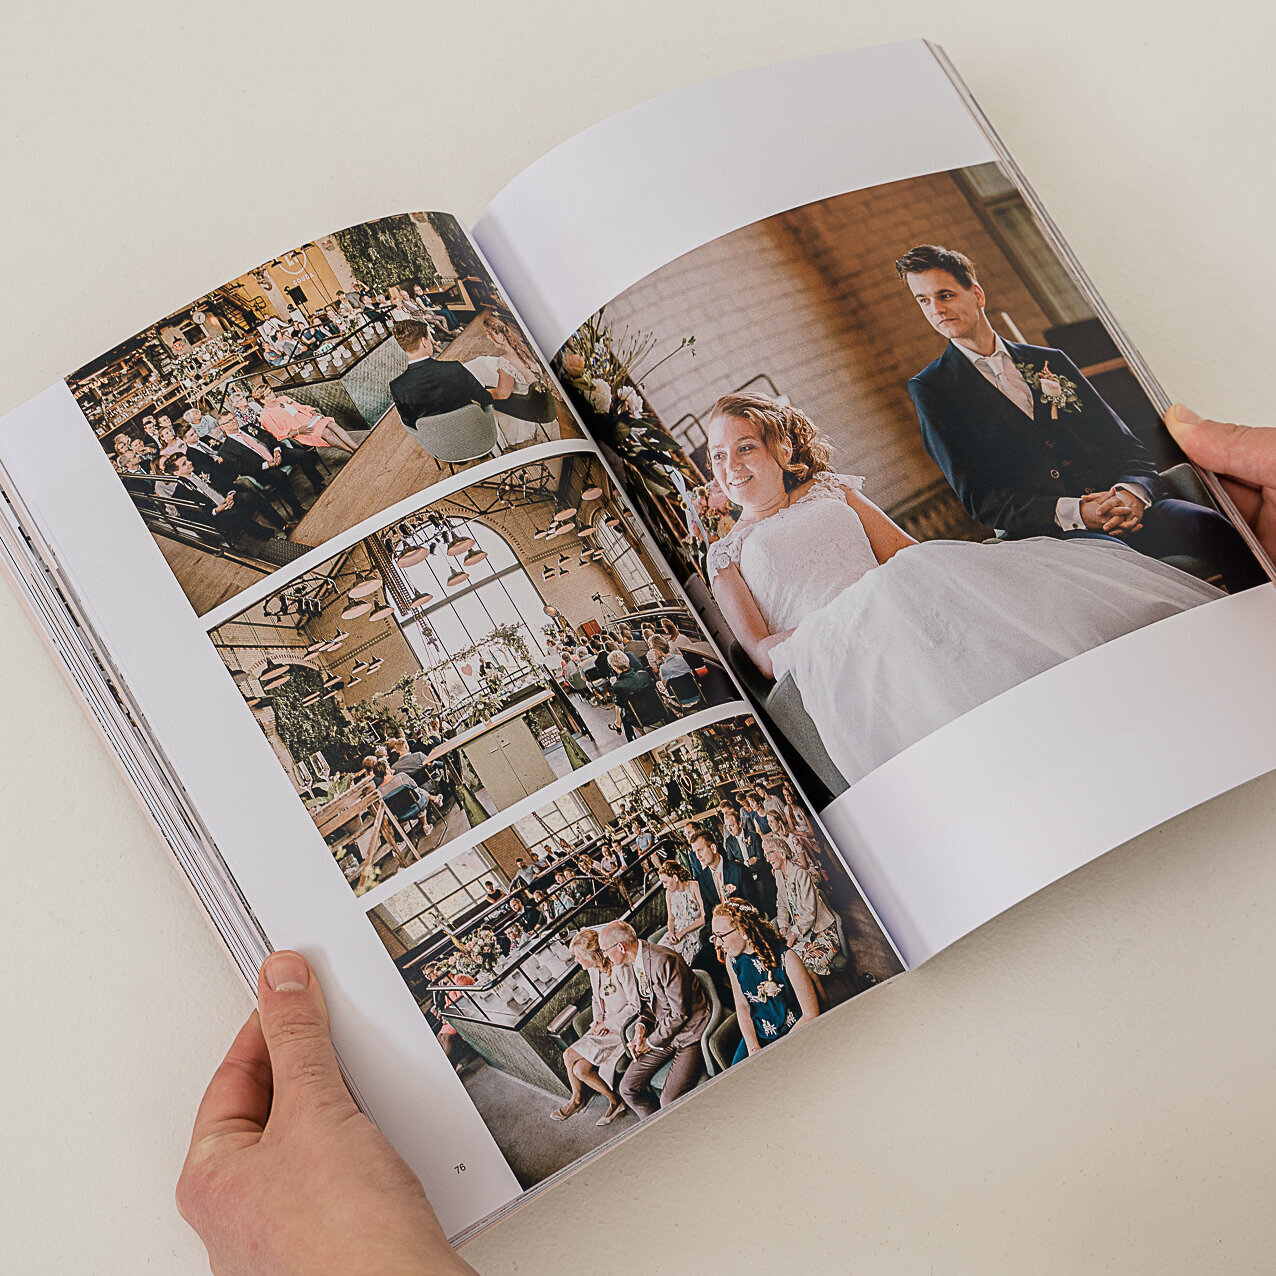 Huwelijksceremonie Lichtfabriek Gouda in romantic magazine